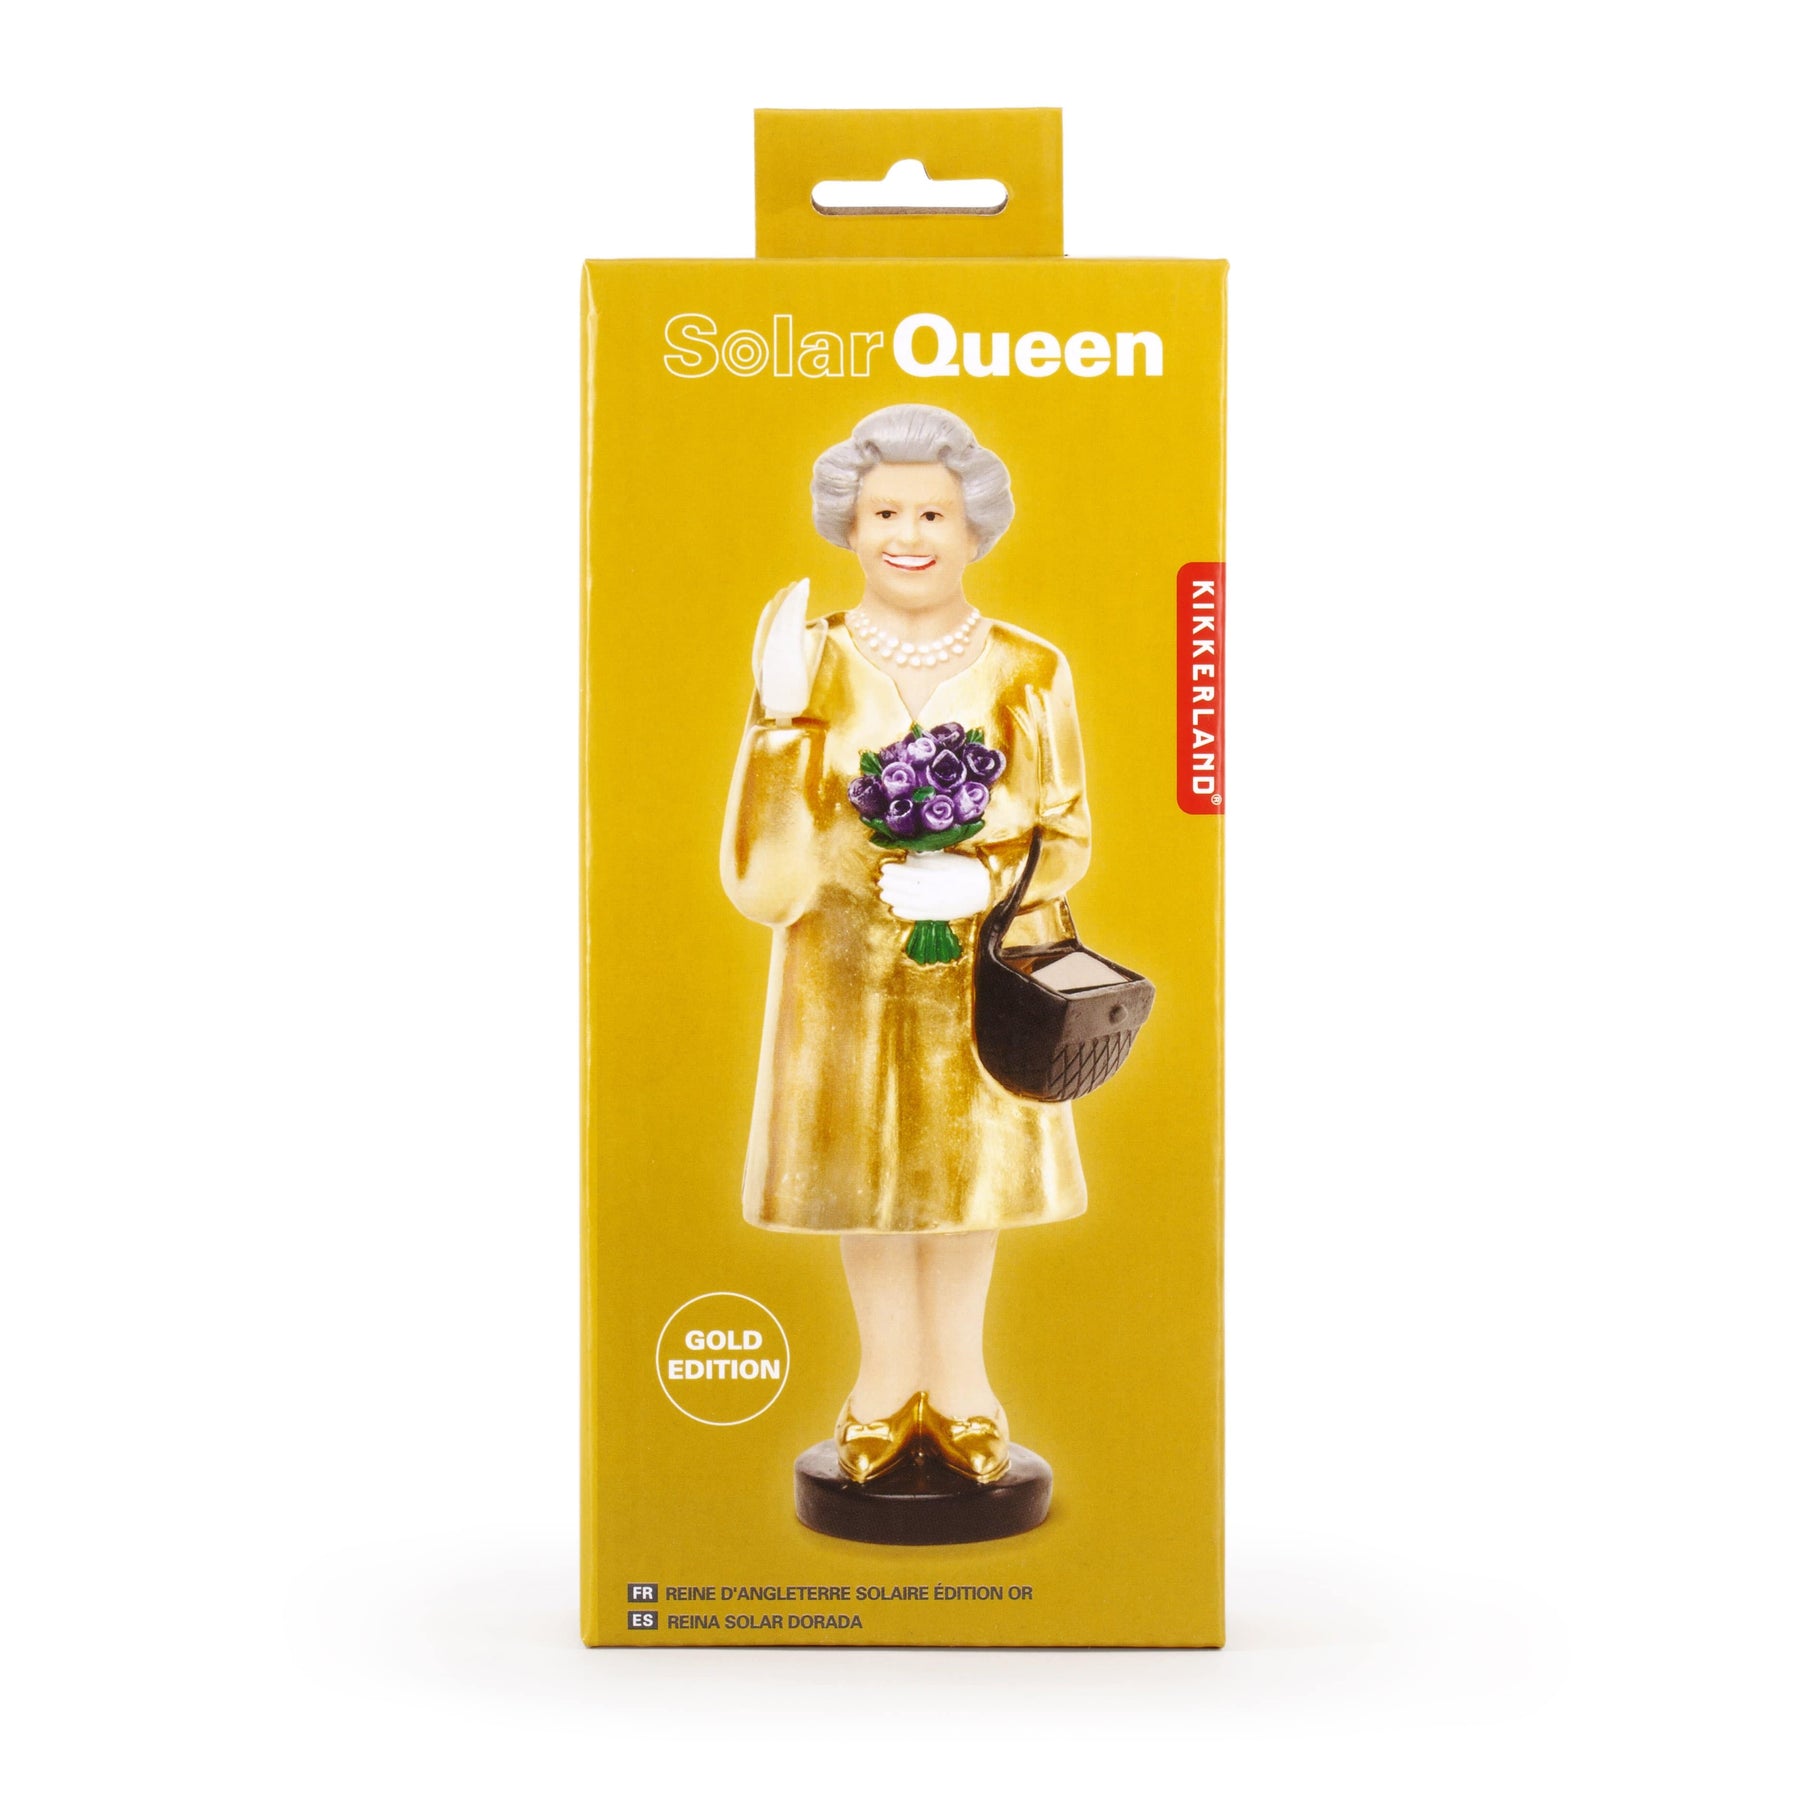 Solar Queen Gold Edition - Figurine solaire